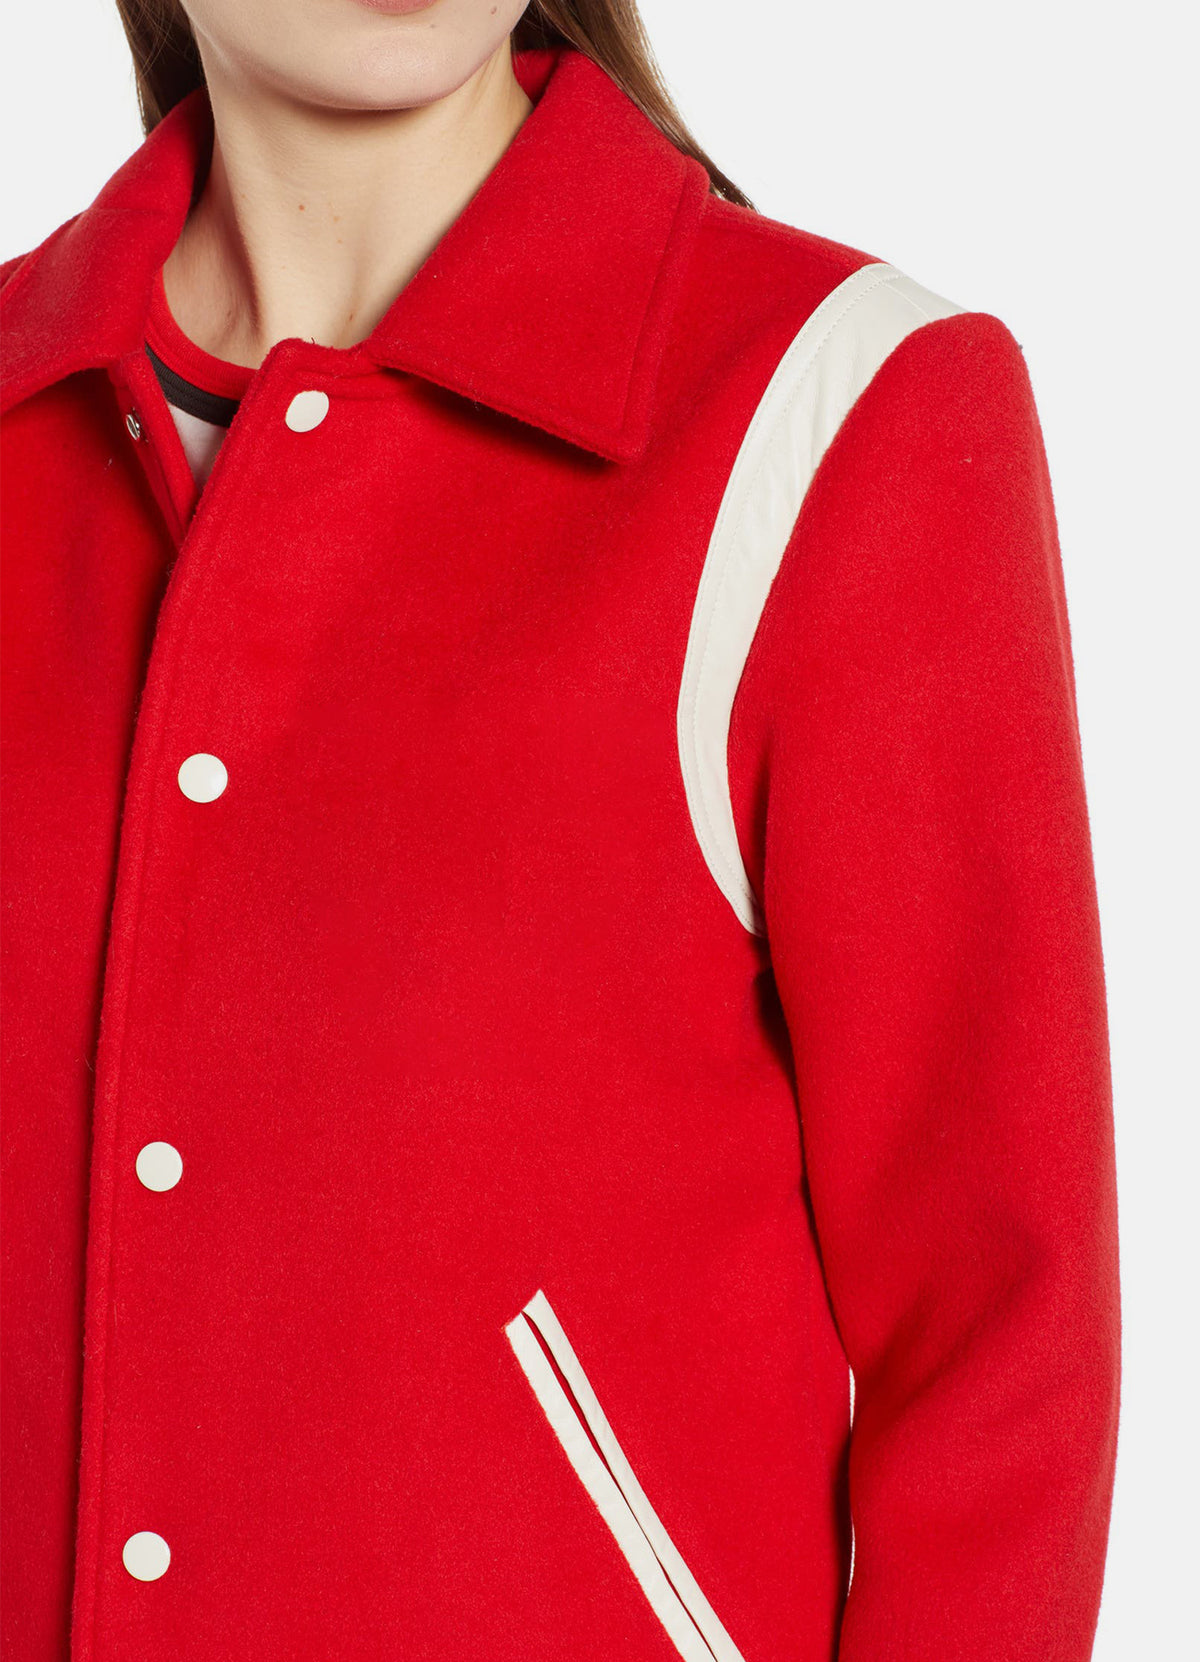 Womens Bright Red Varsity Jacket